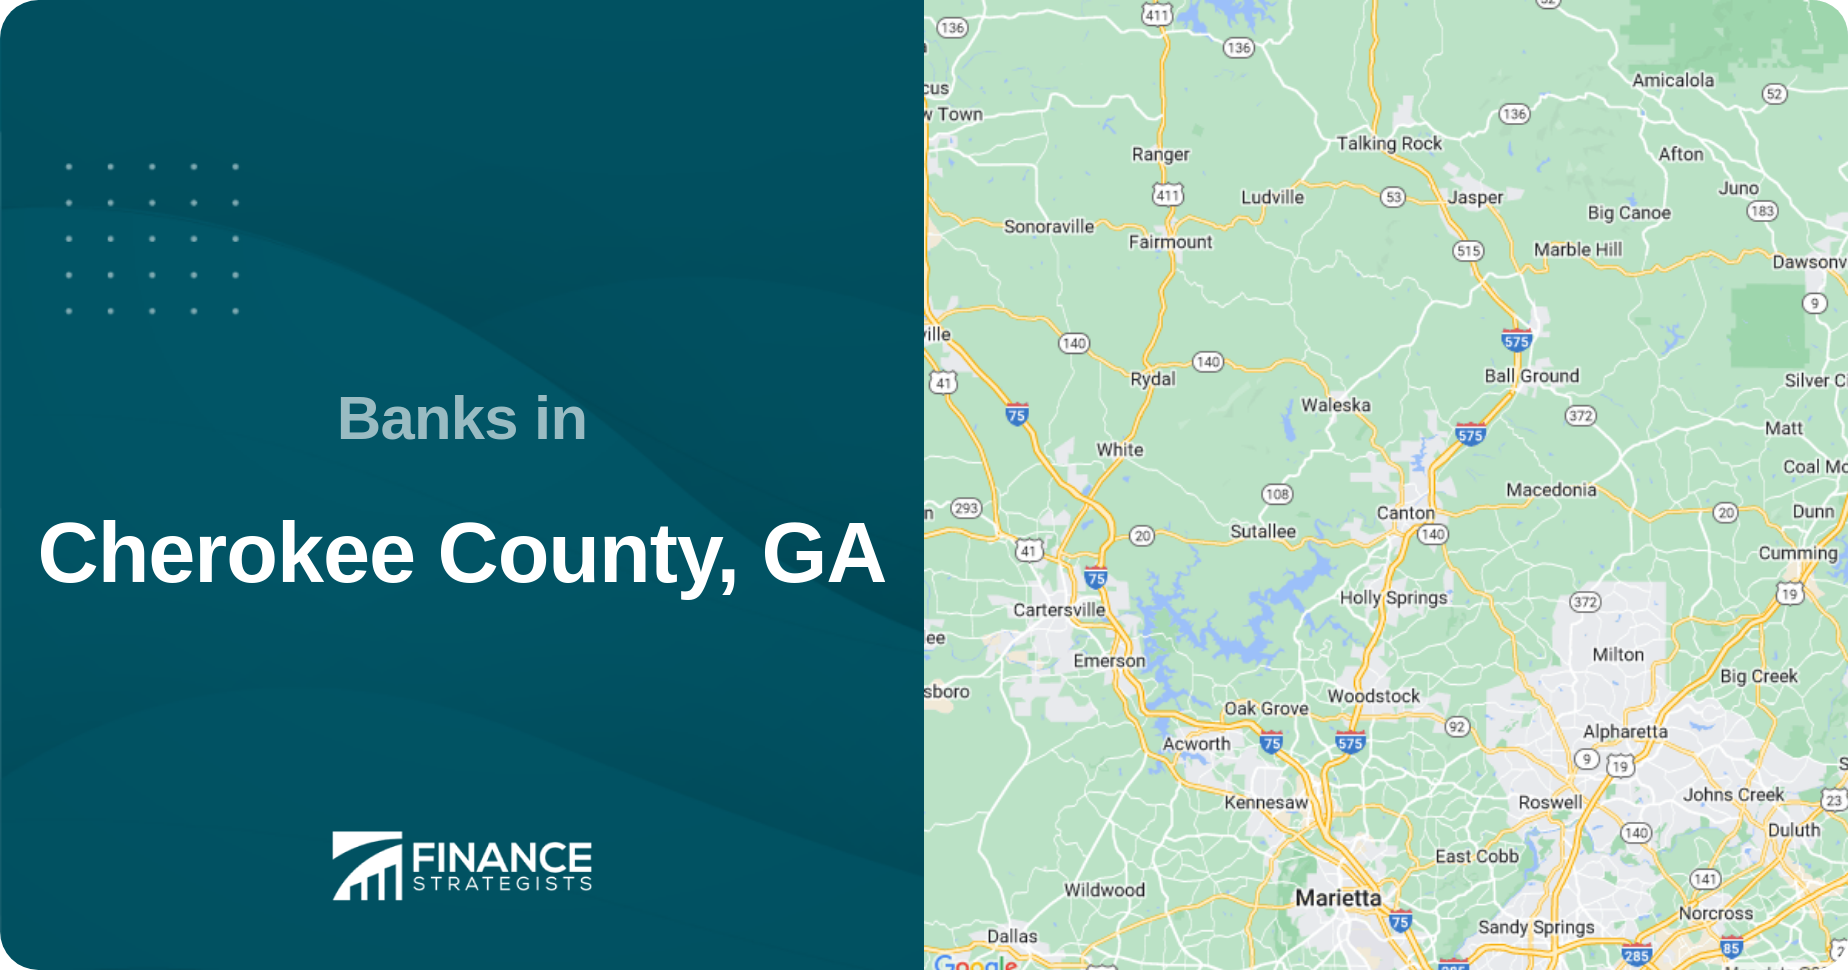 Banks in Cherokee County, GA